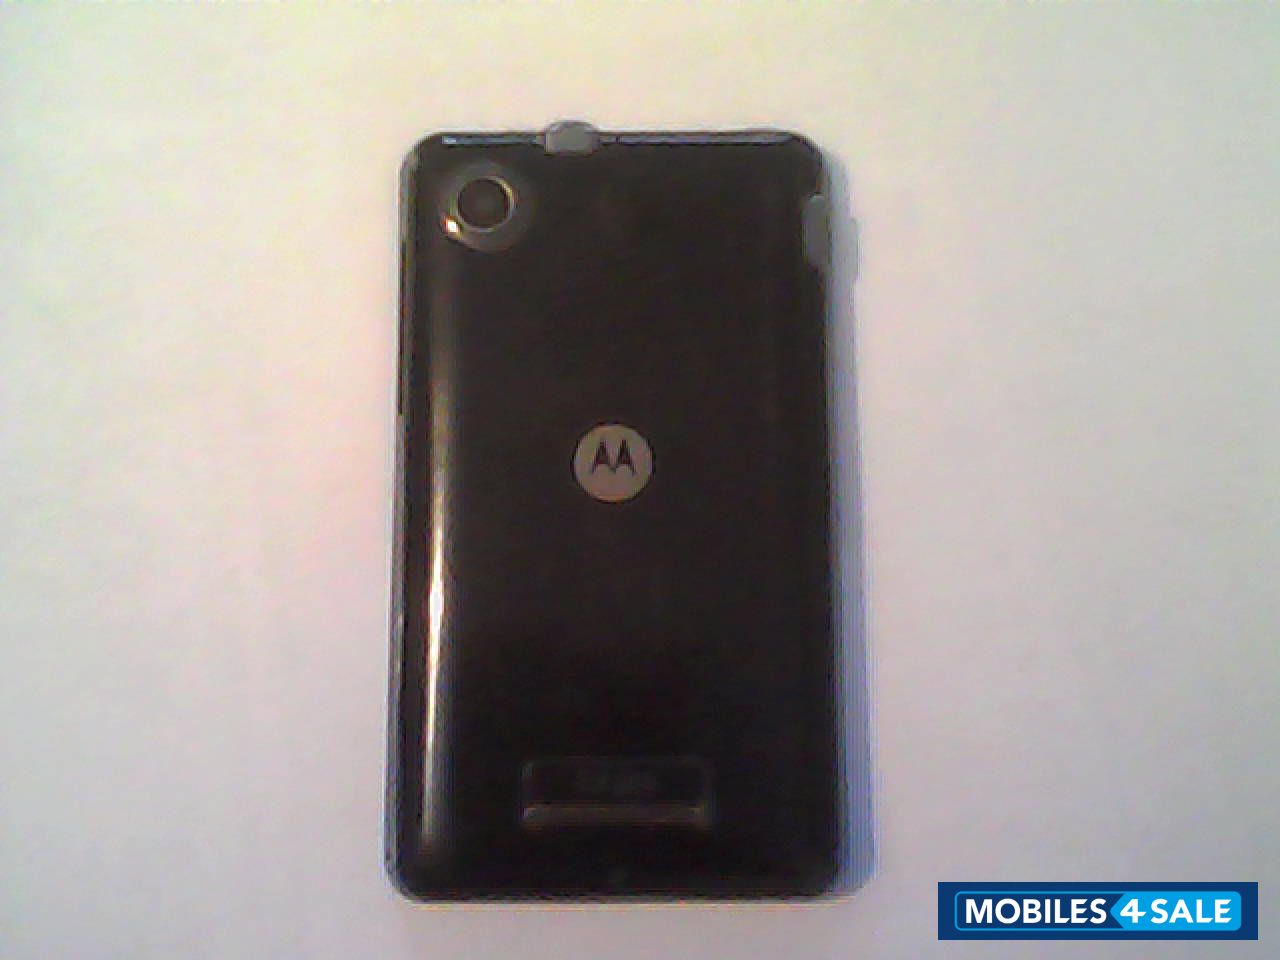 White & Black Motorola EX119